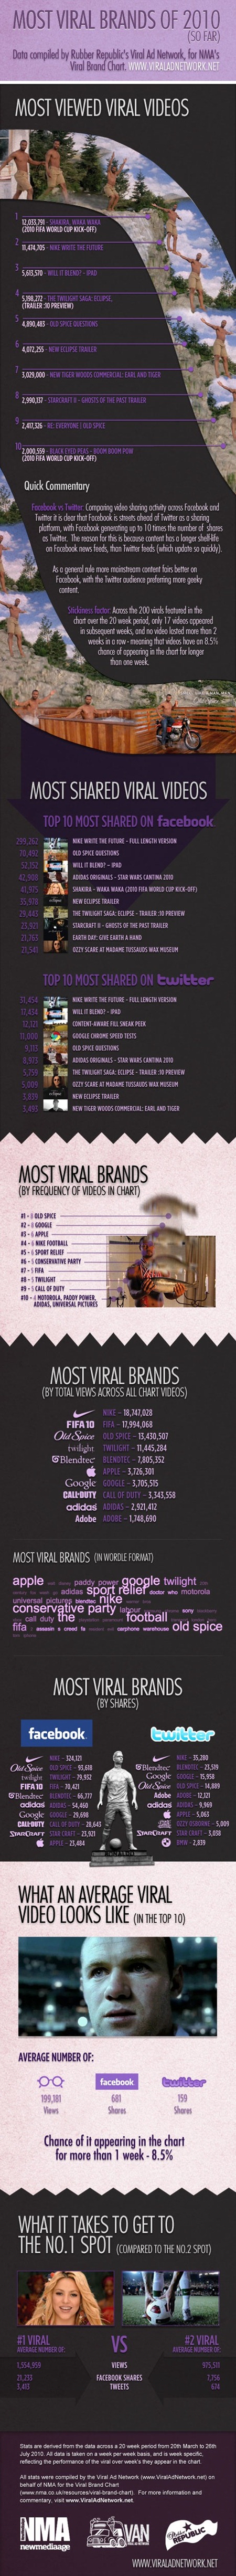 most viral brands 2010